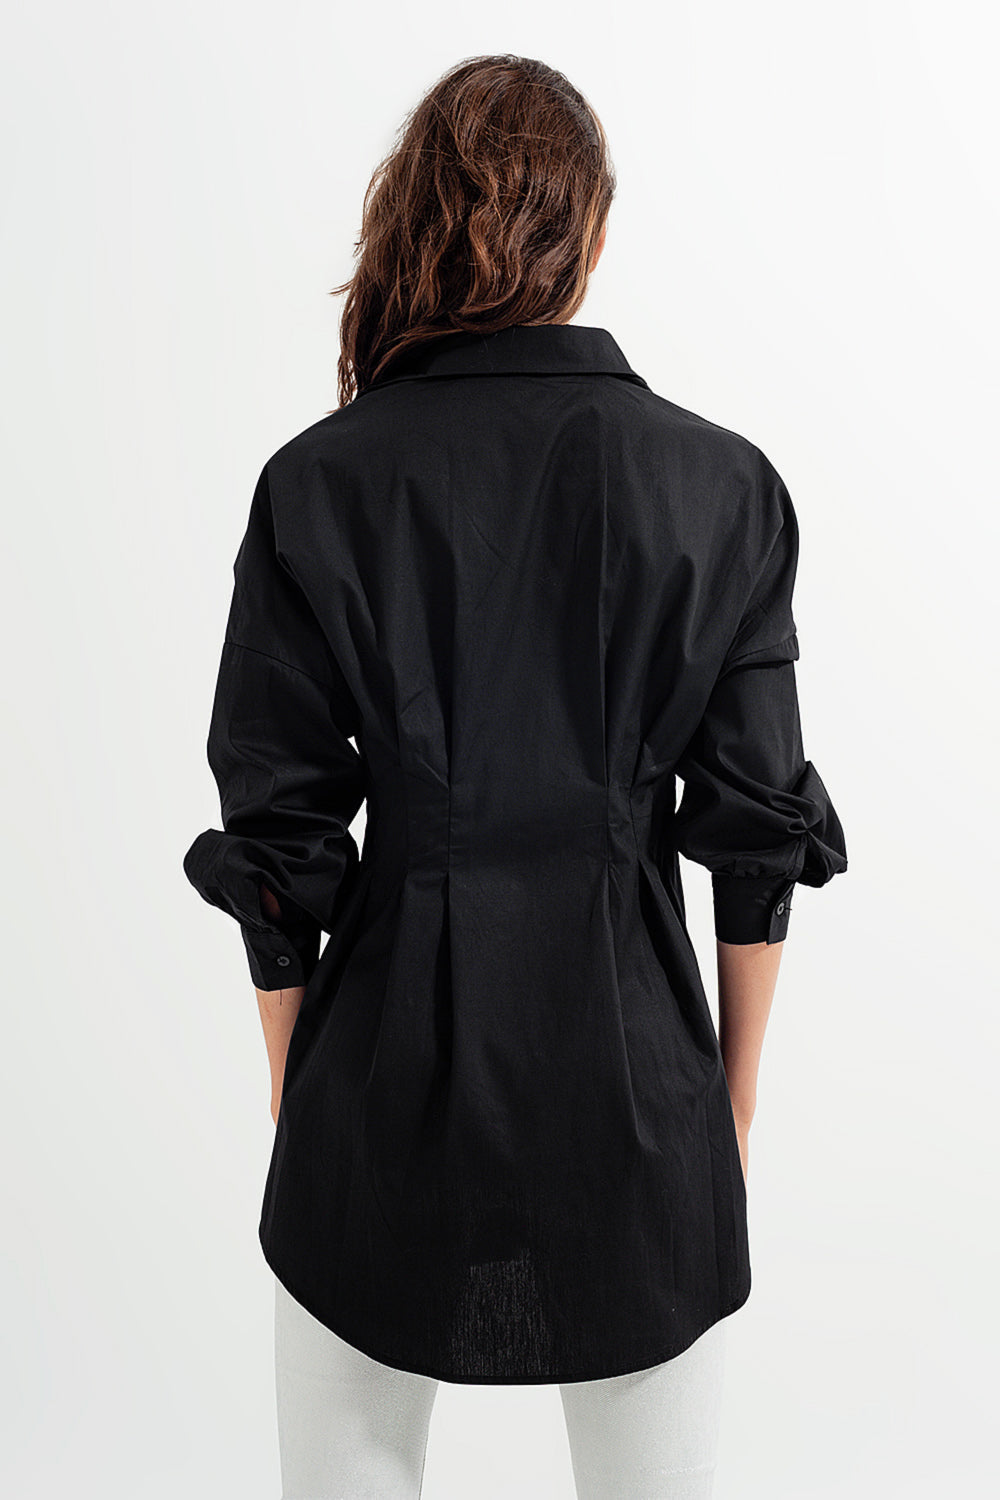 Q2-black-longsleeved-fitted-poplin-shirt-DJV-Boutique.jpg